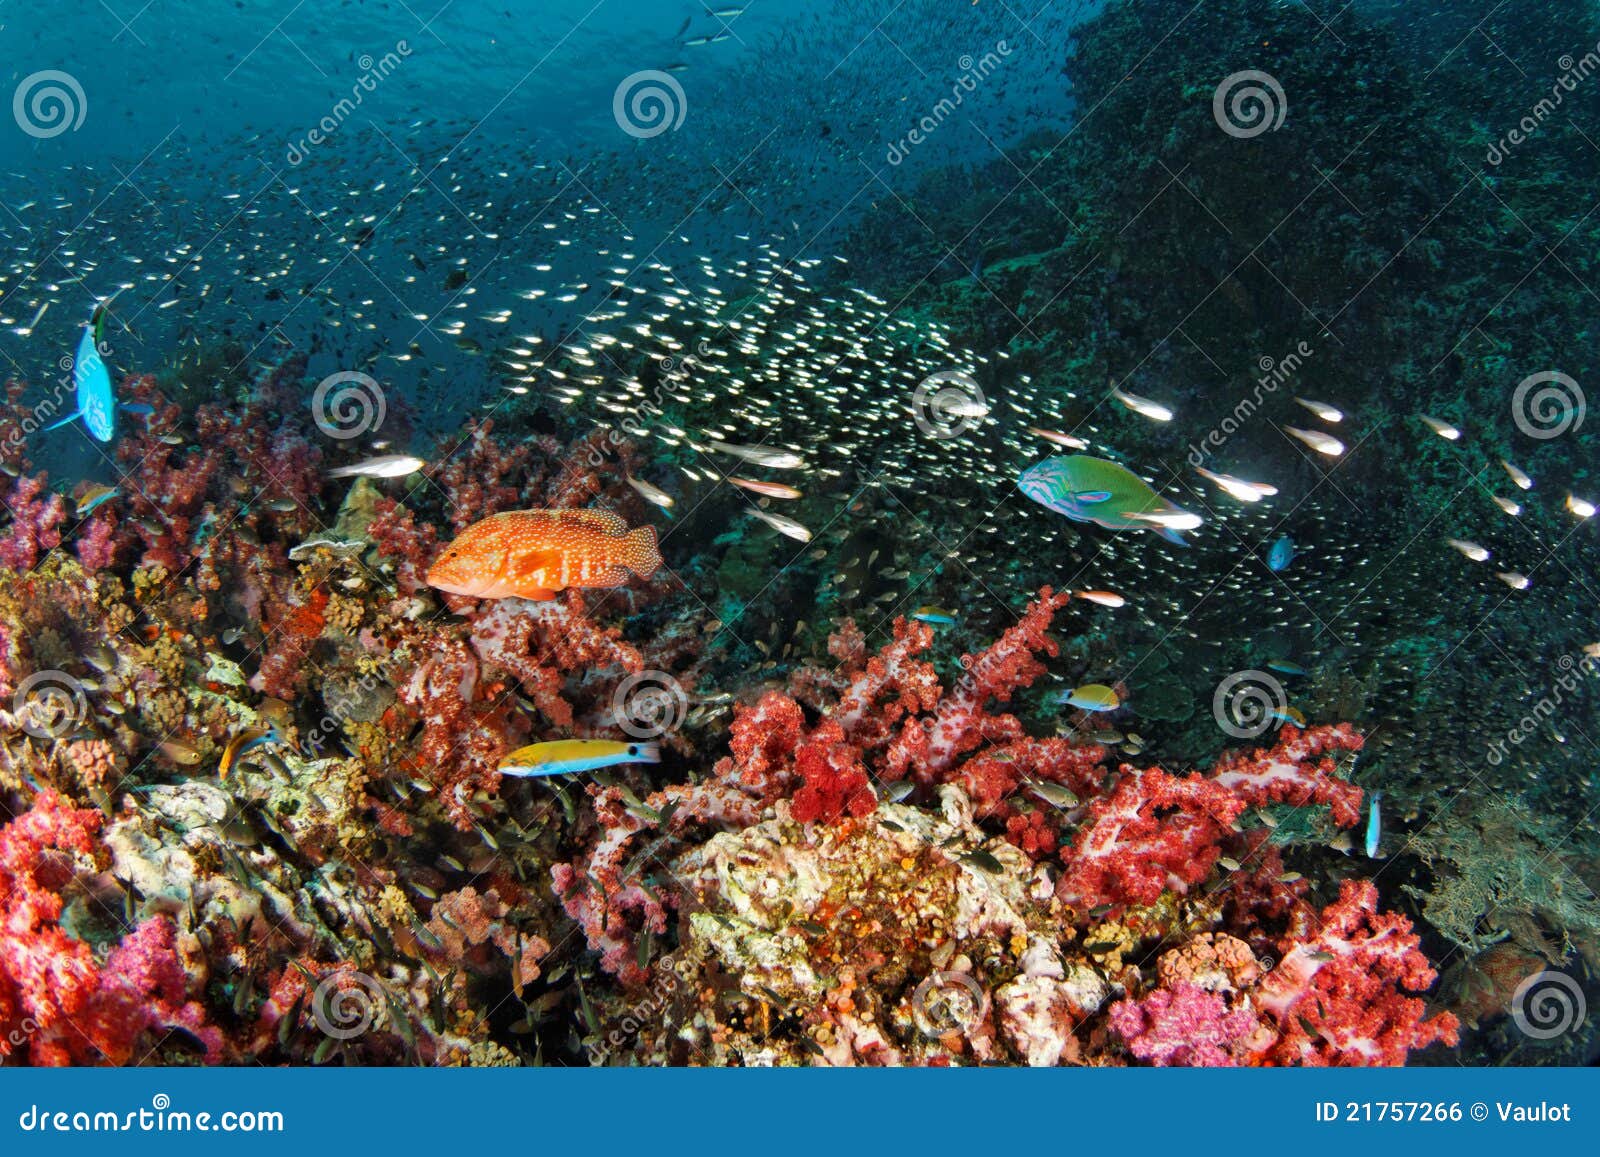 reef life - andaman sea